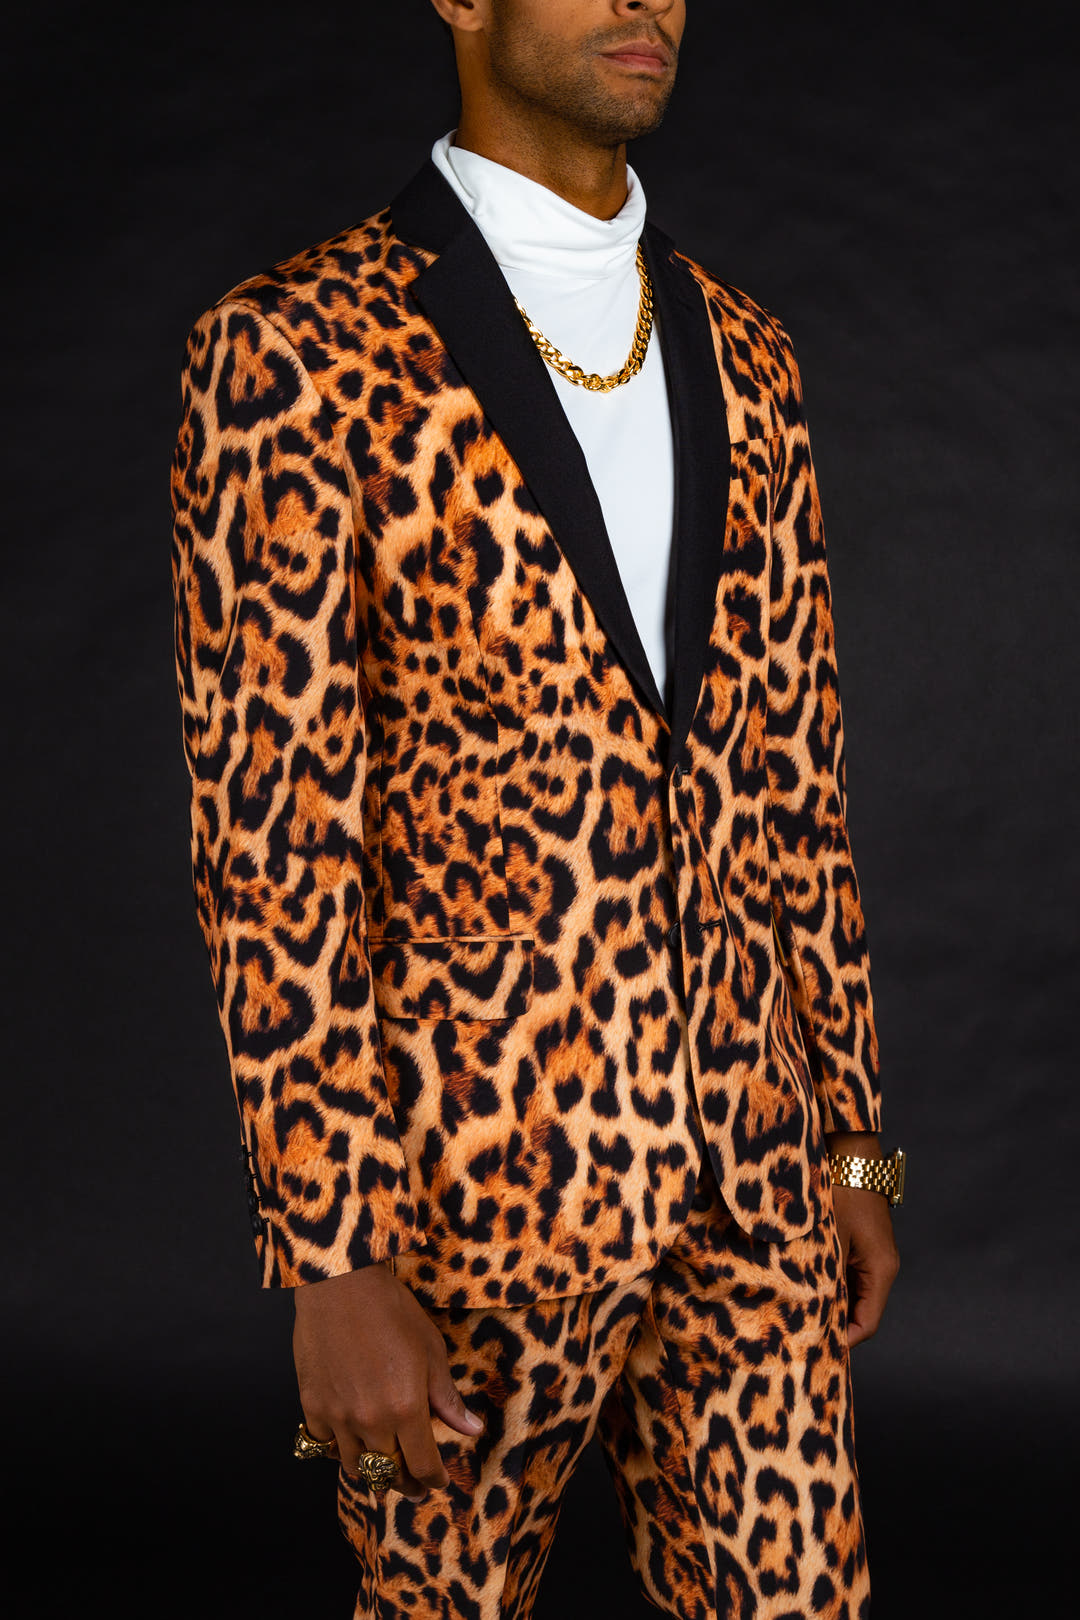 Leopard Print Suit Fastest Finishers 5170